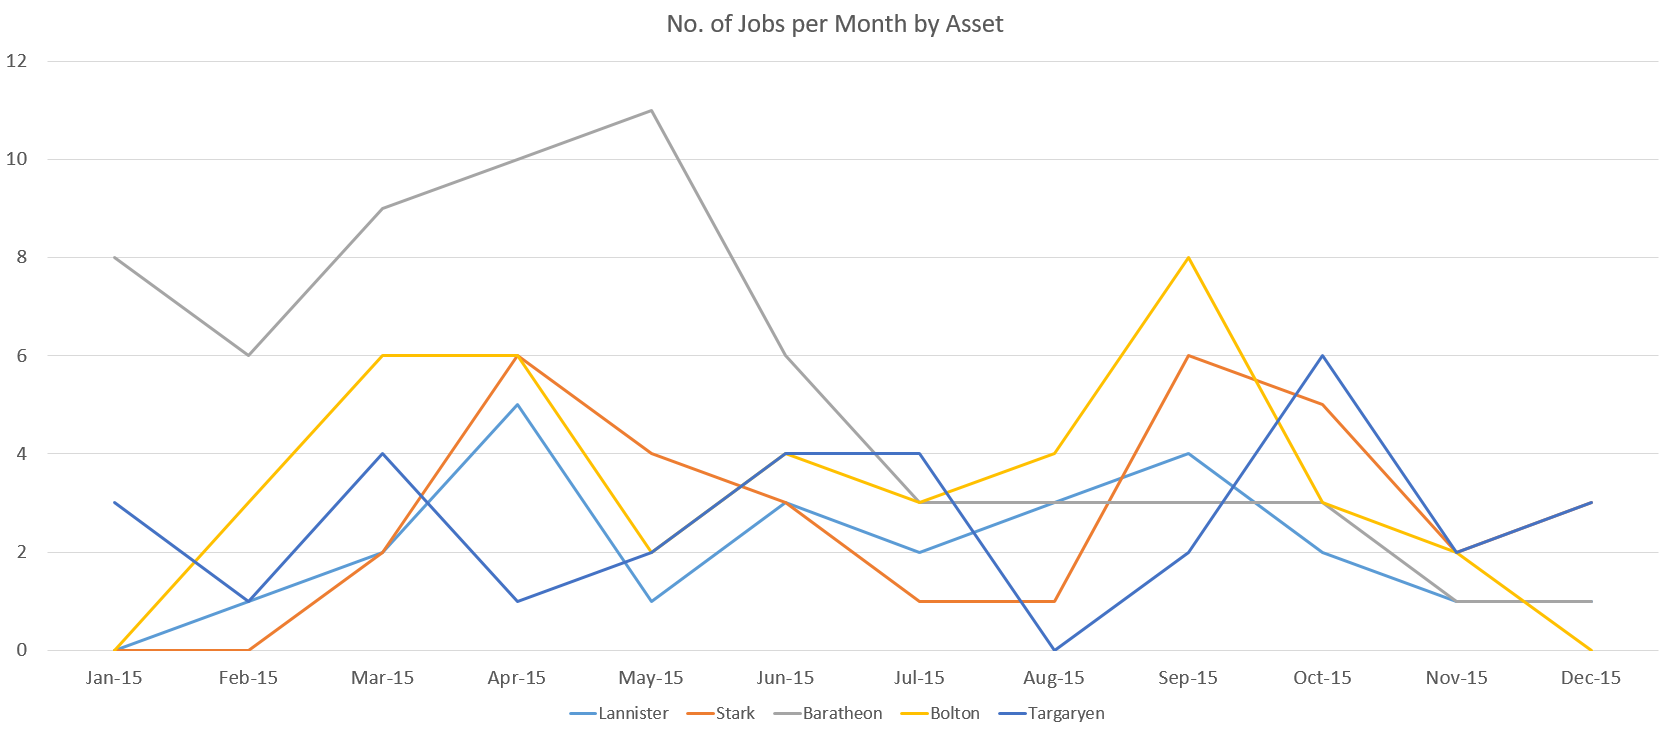 Jobs per month by asset